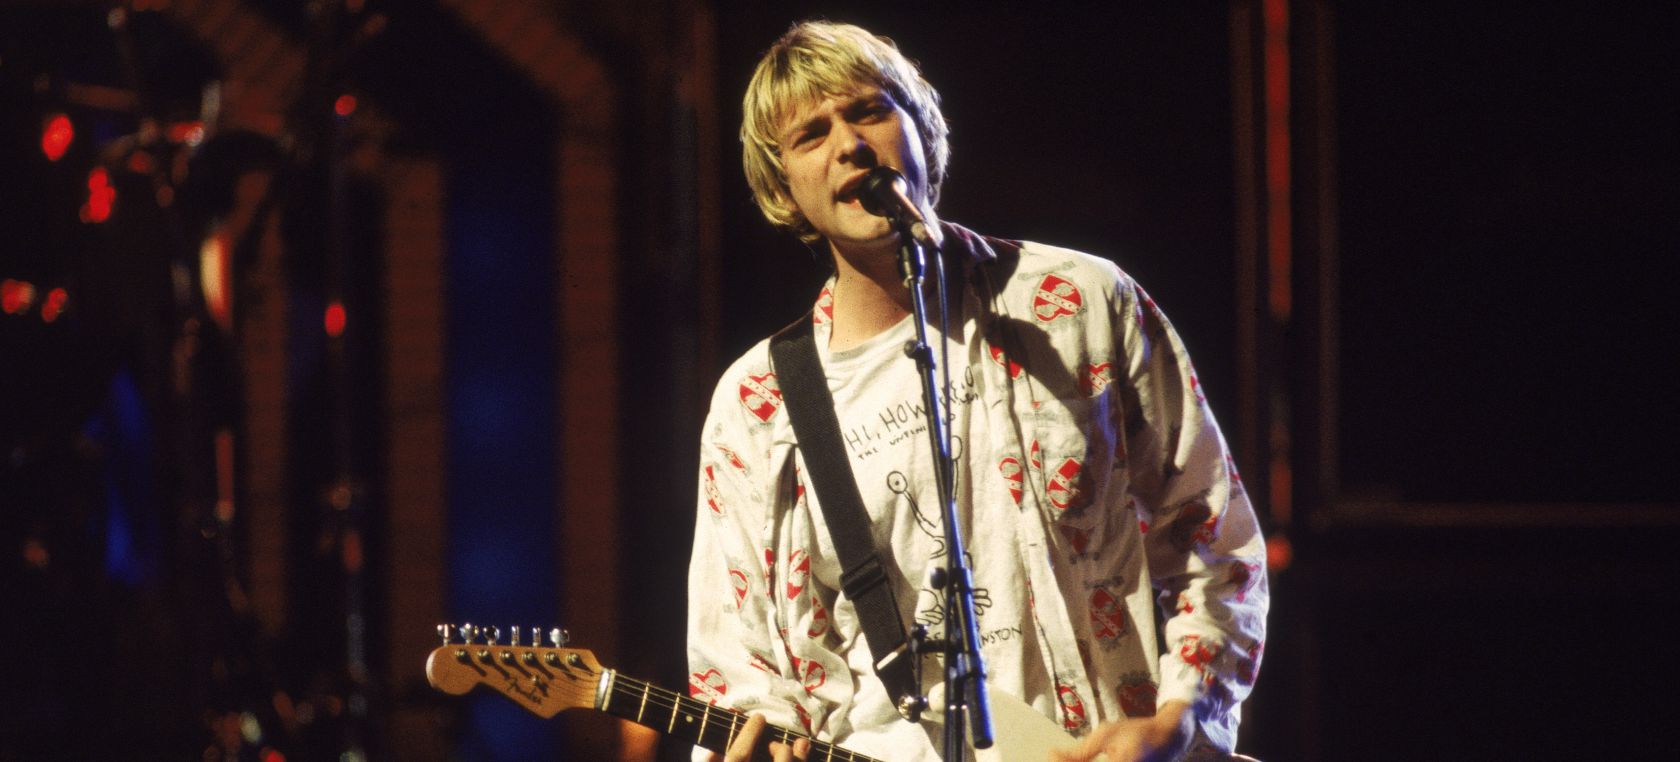 La última visita a España de Kurt Cobain con Nirvana